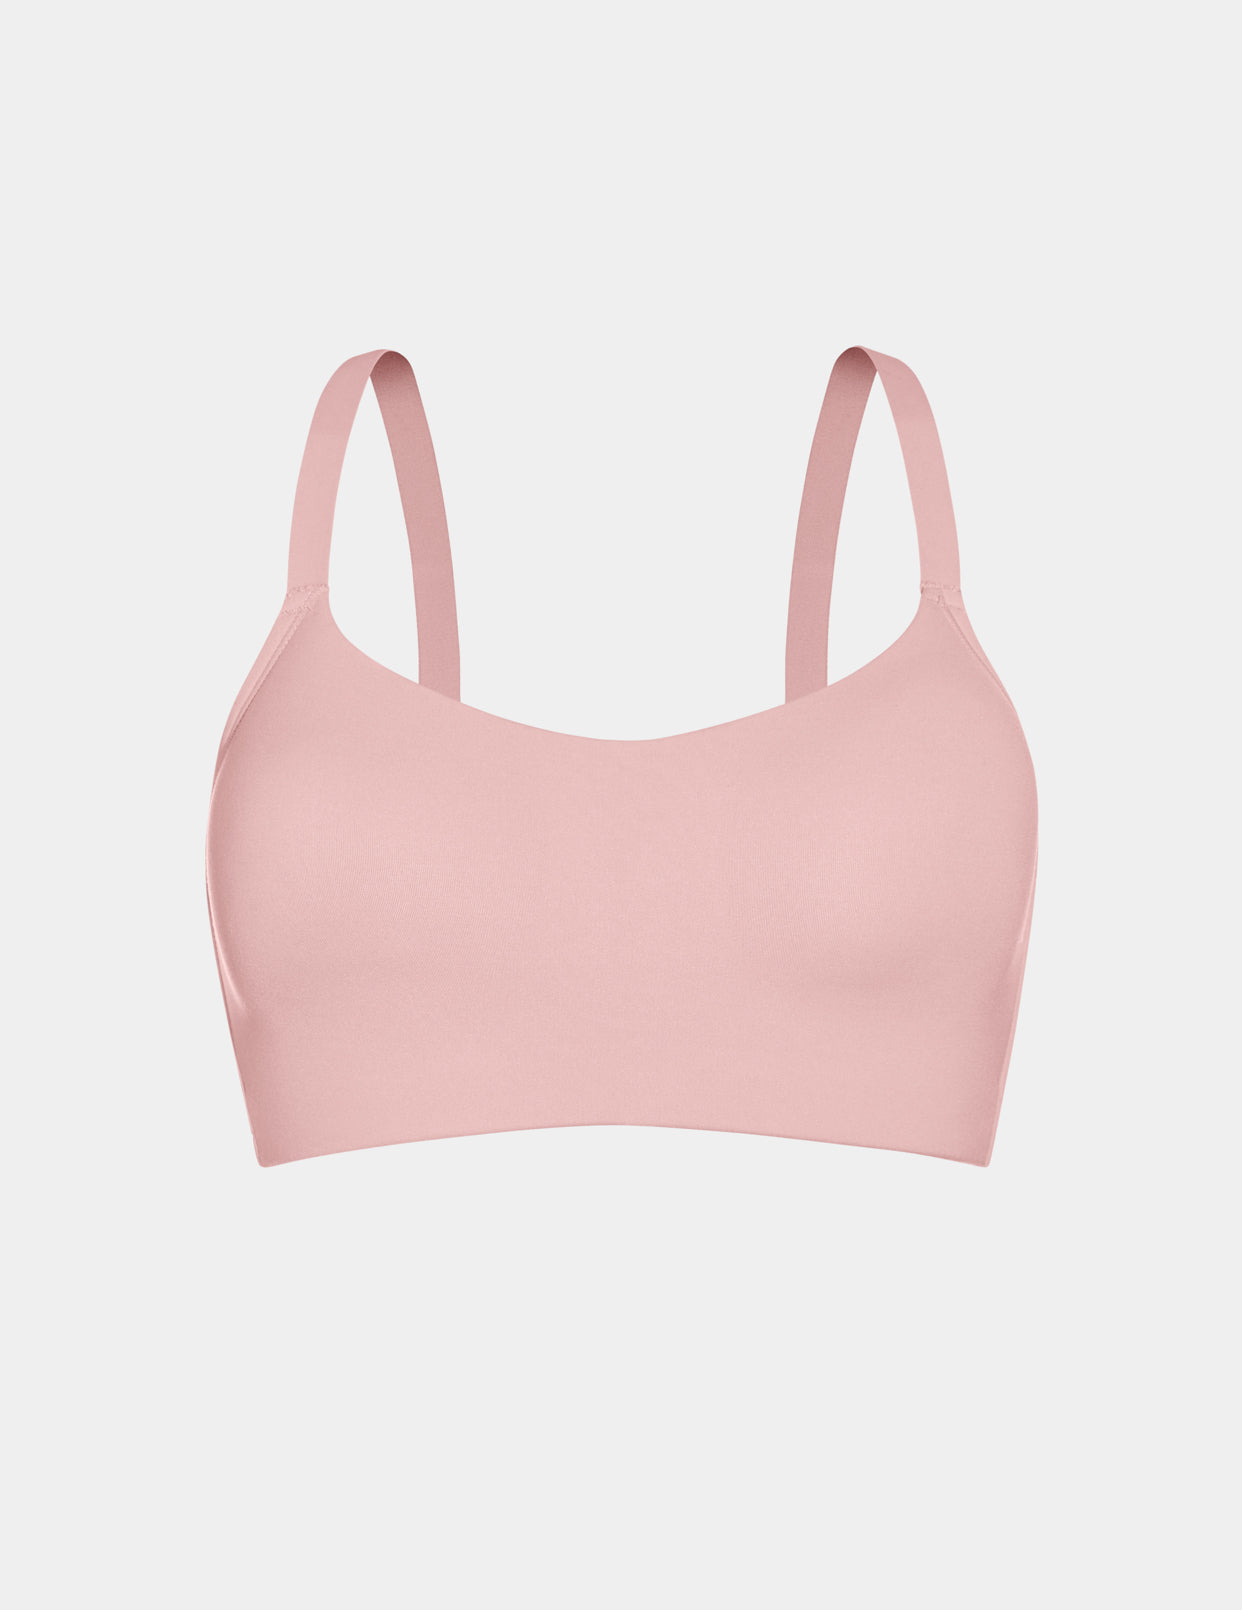 Boscov's - Tomorrow through May 30th, buy one bra, get one for 99